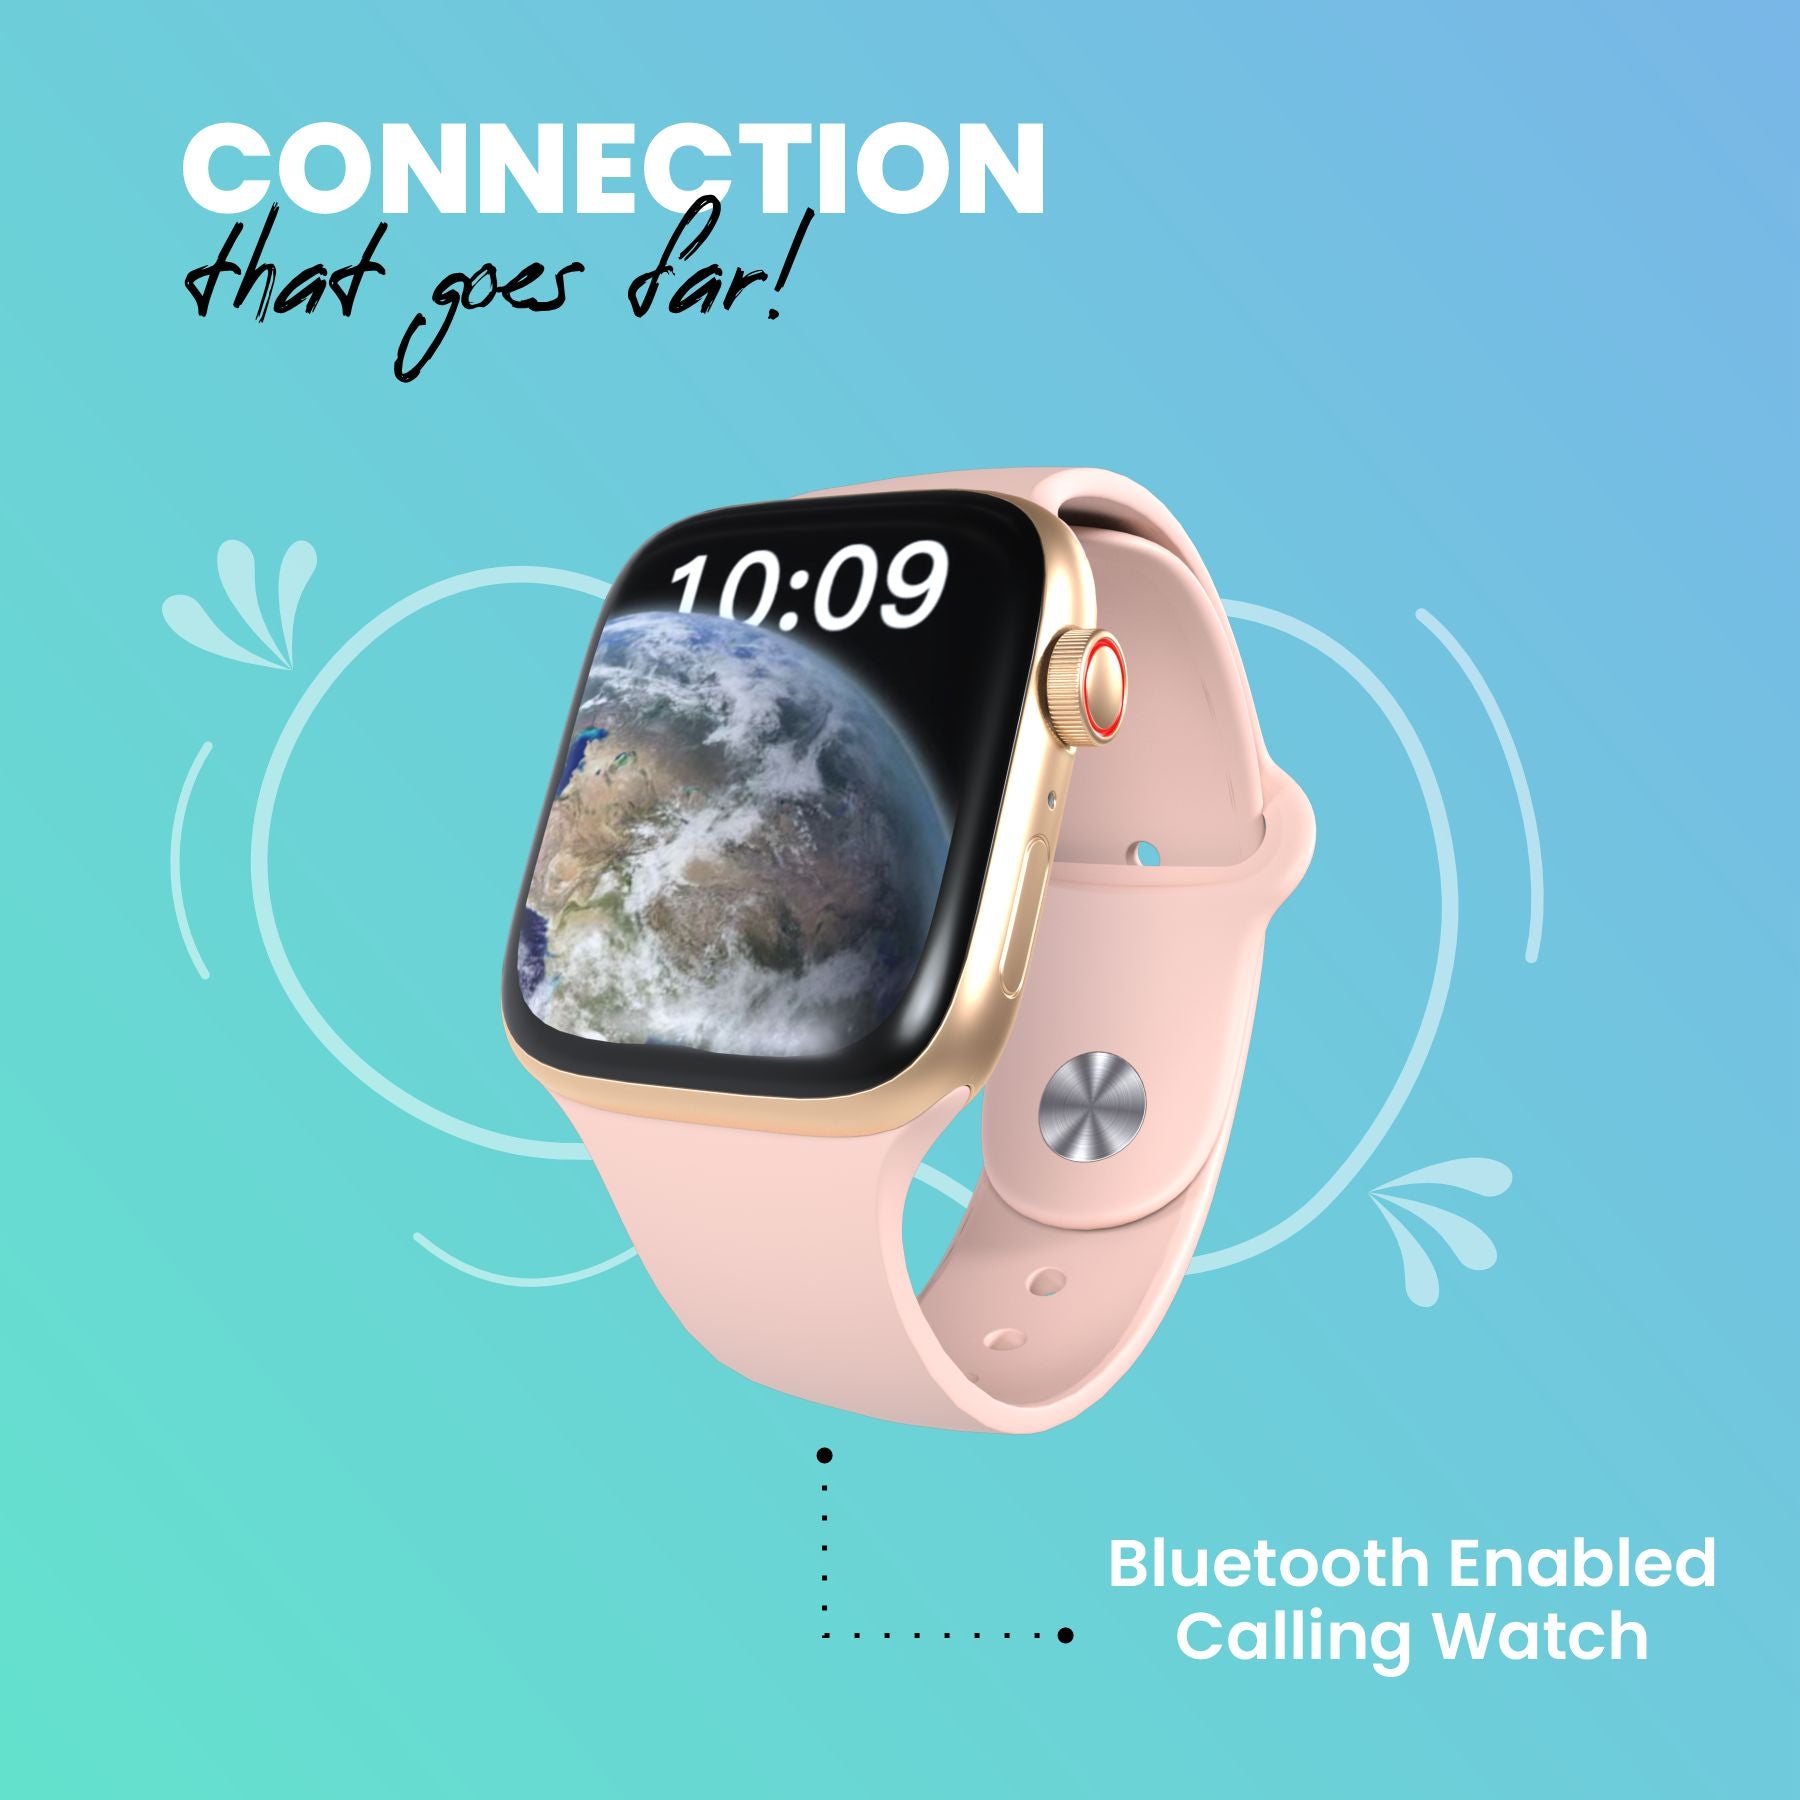 LYNE Lancer 3 Smart Watch 2.0″ IPS Screen